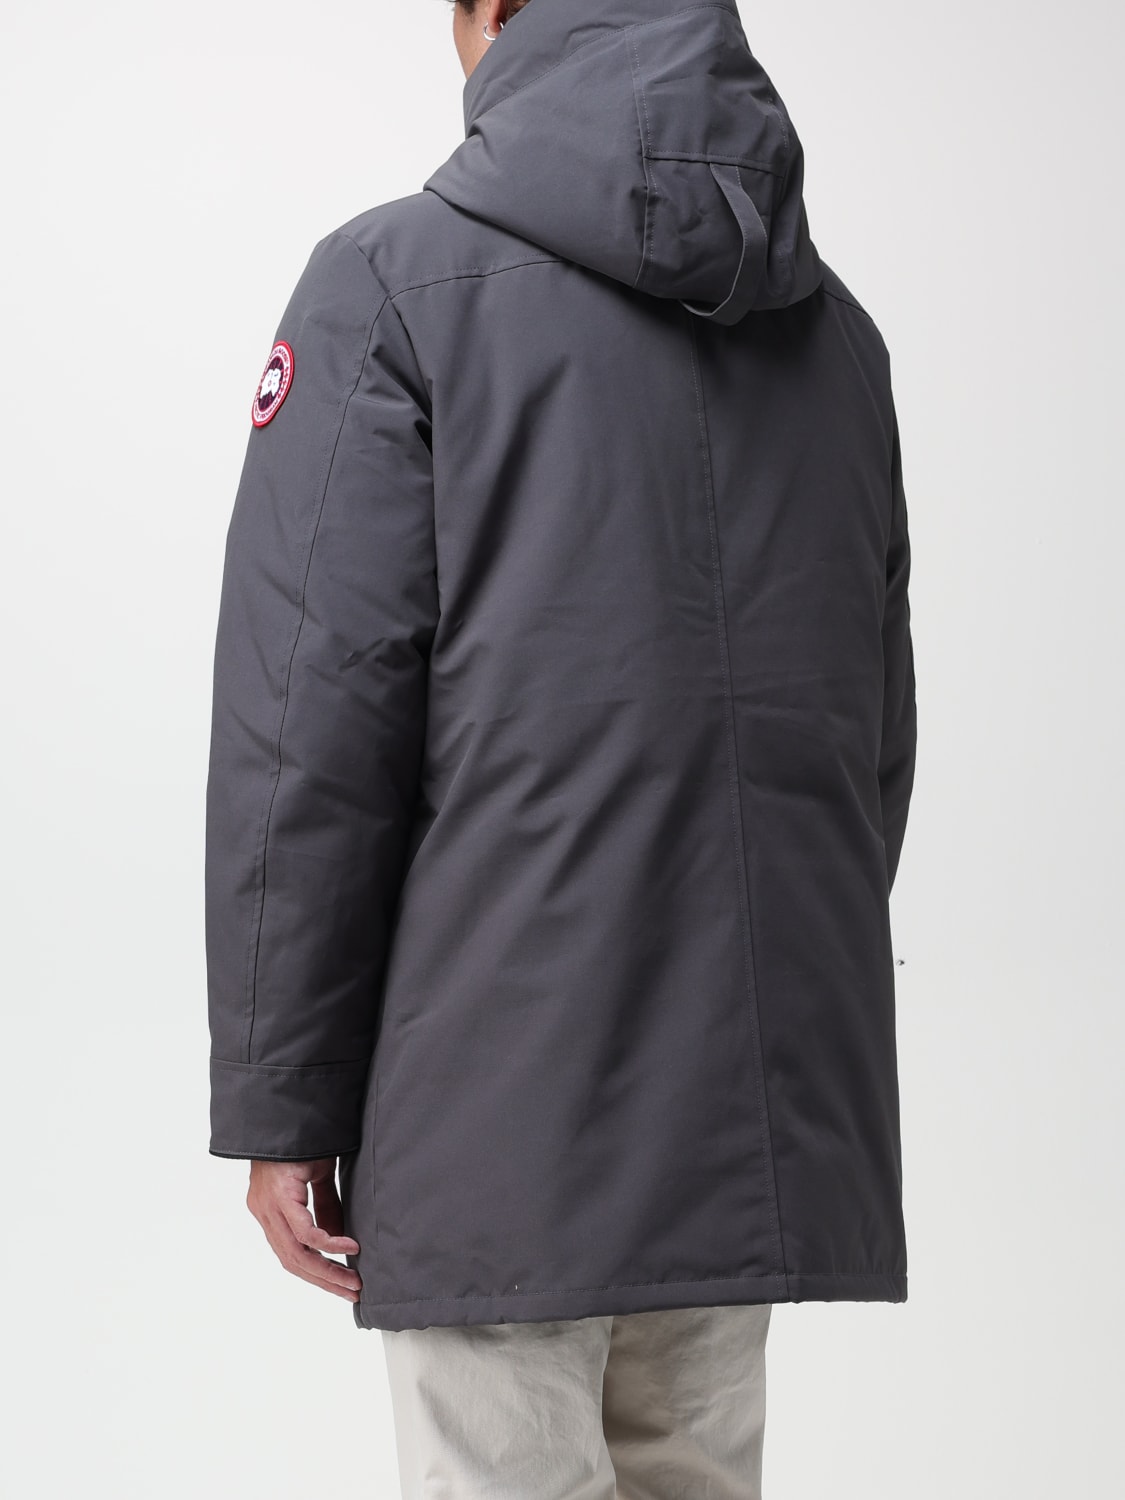 CANADA GOOSE: jacket for man - Grey | Canada Goose jacket 2053M online ...